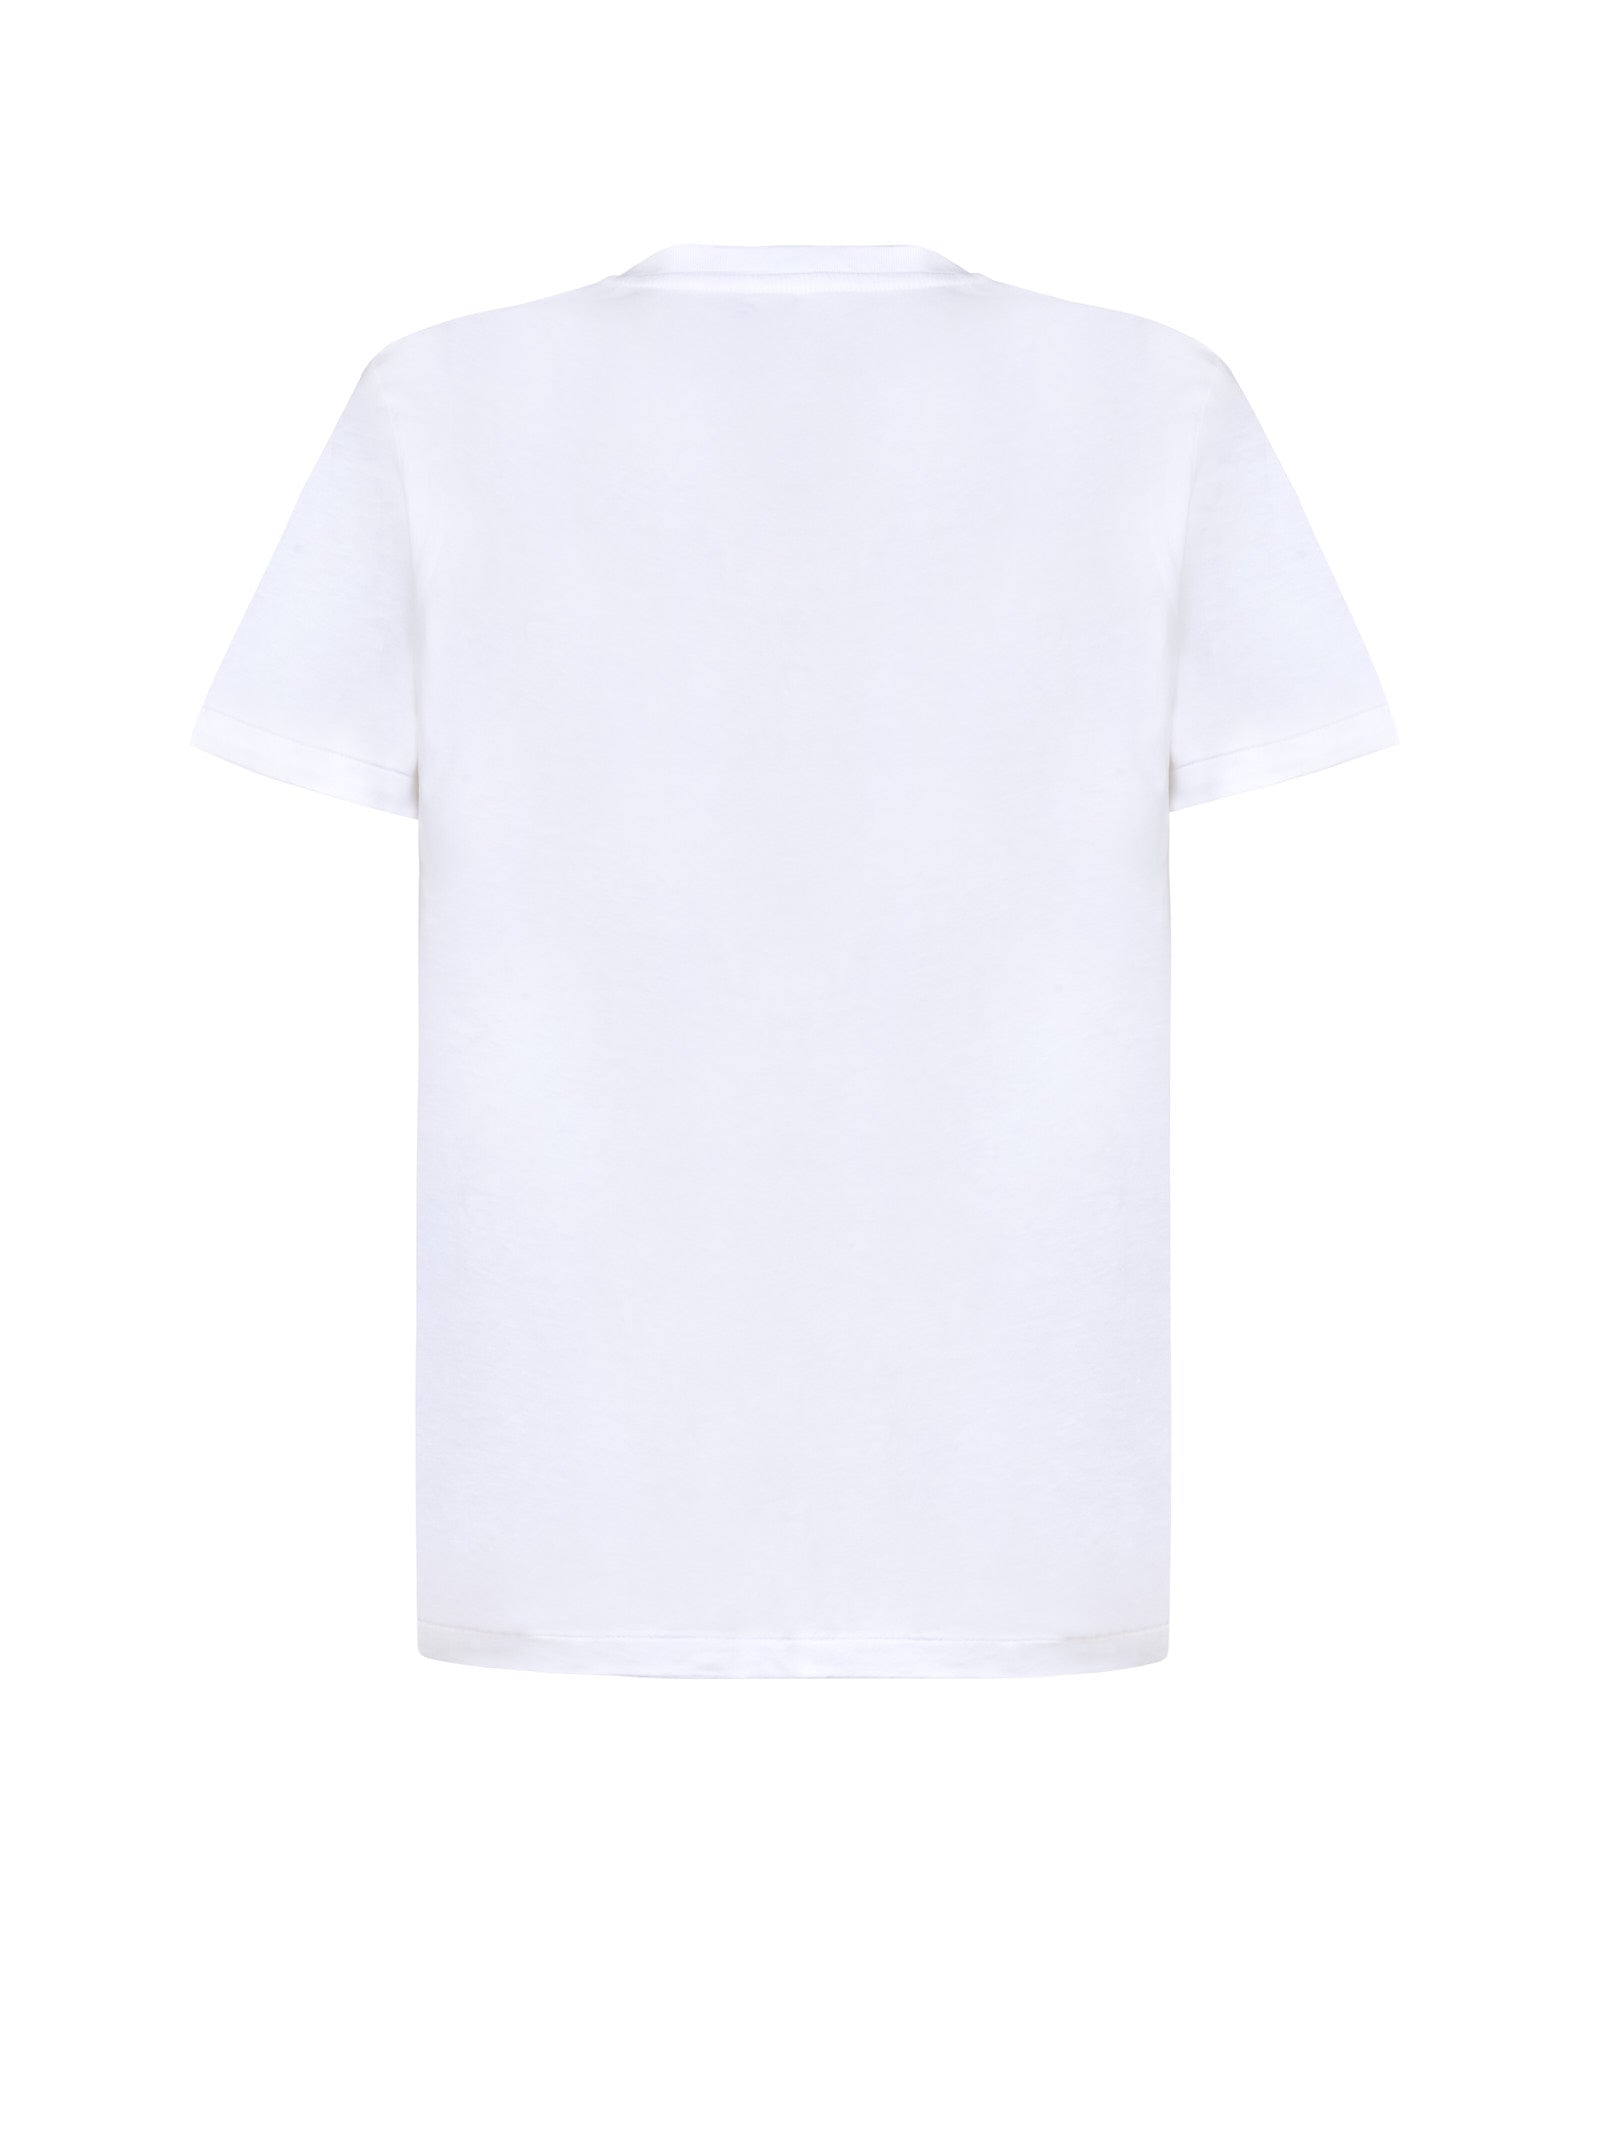 T-shirt POLO RALPH LAUREN
White